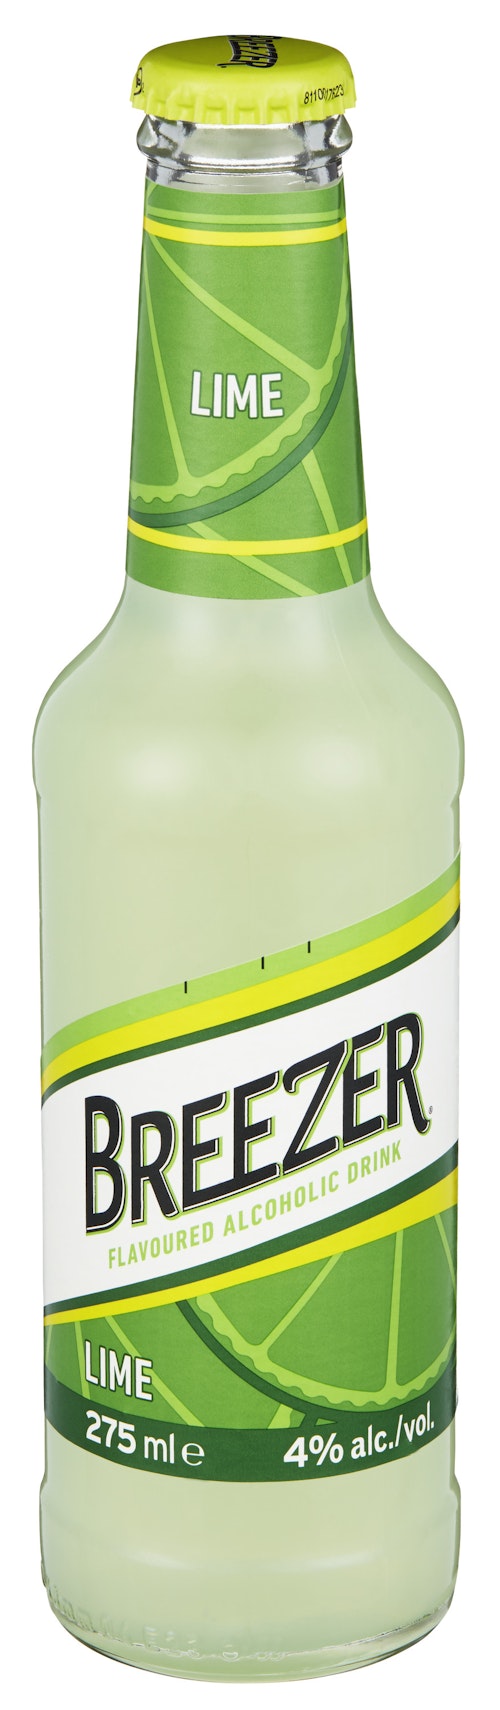 Bacardi Bacardi Breezer Lime 275 ml